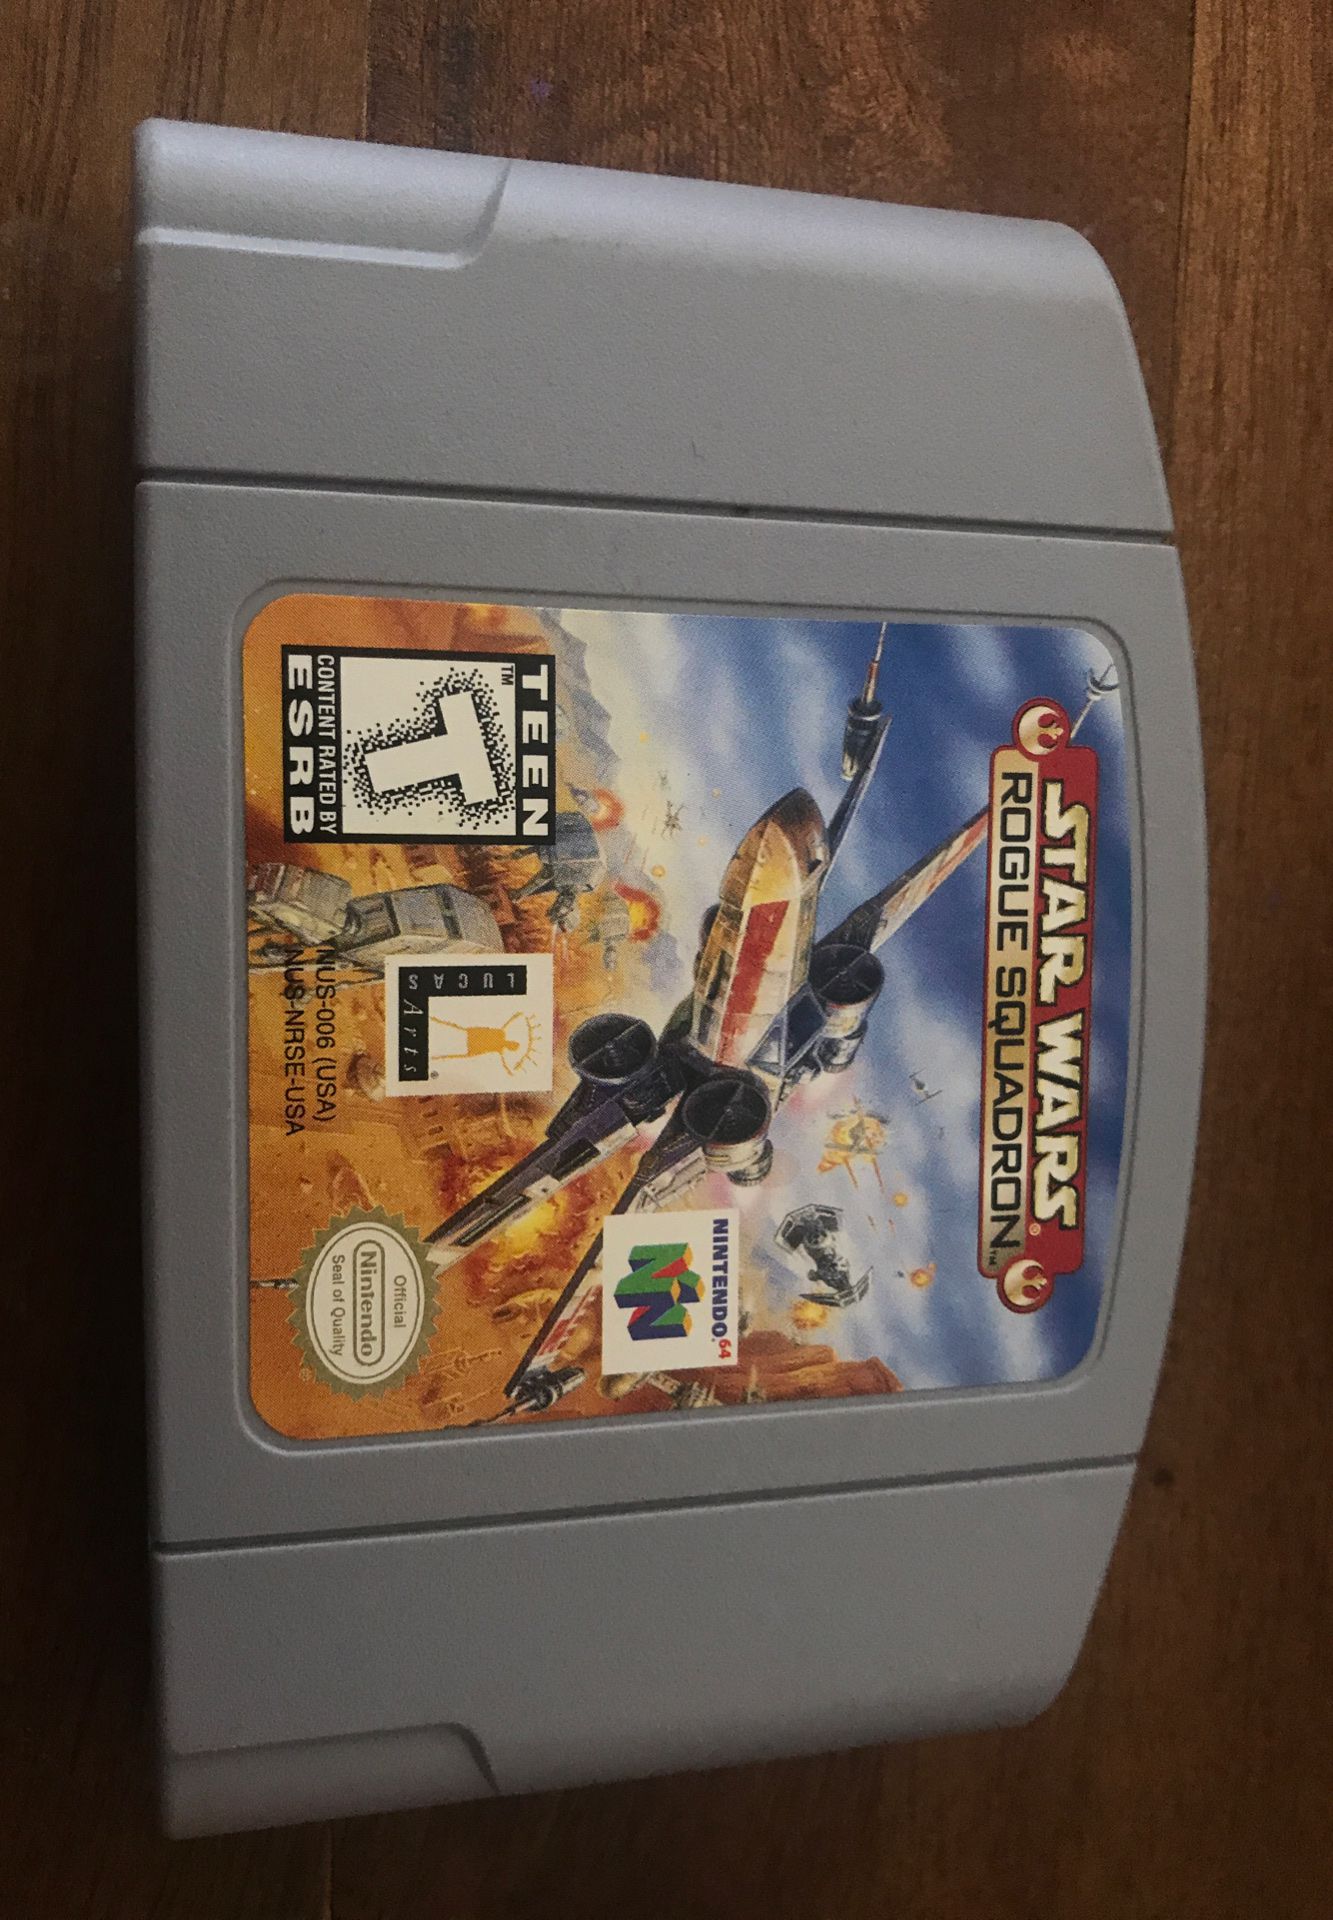 Star Wars rogue squadron (Nintendo 64)